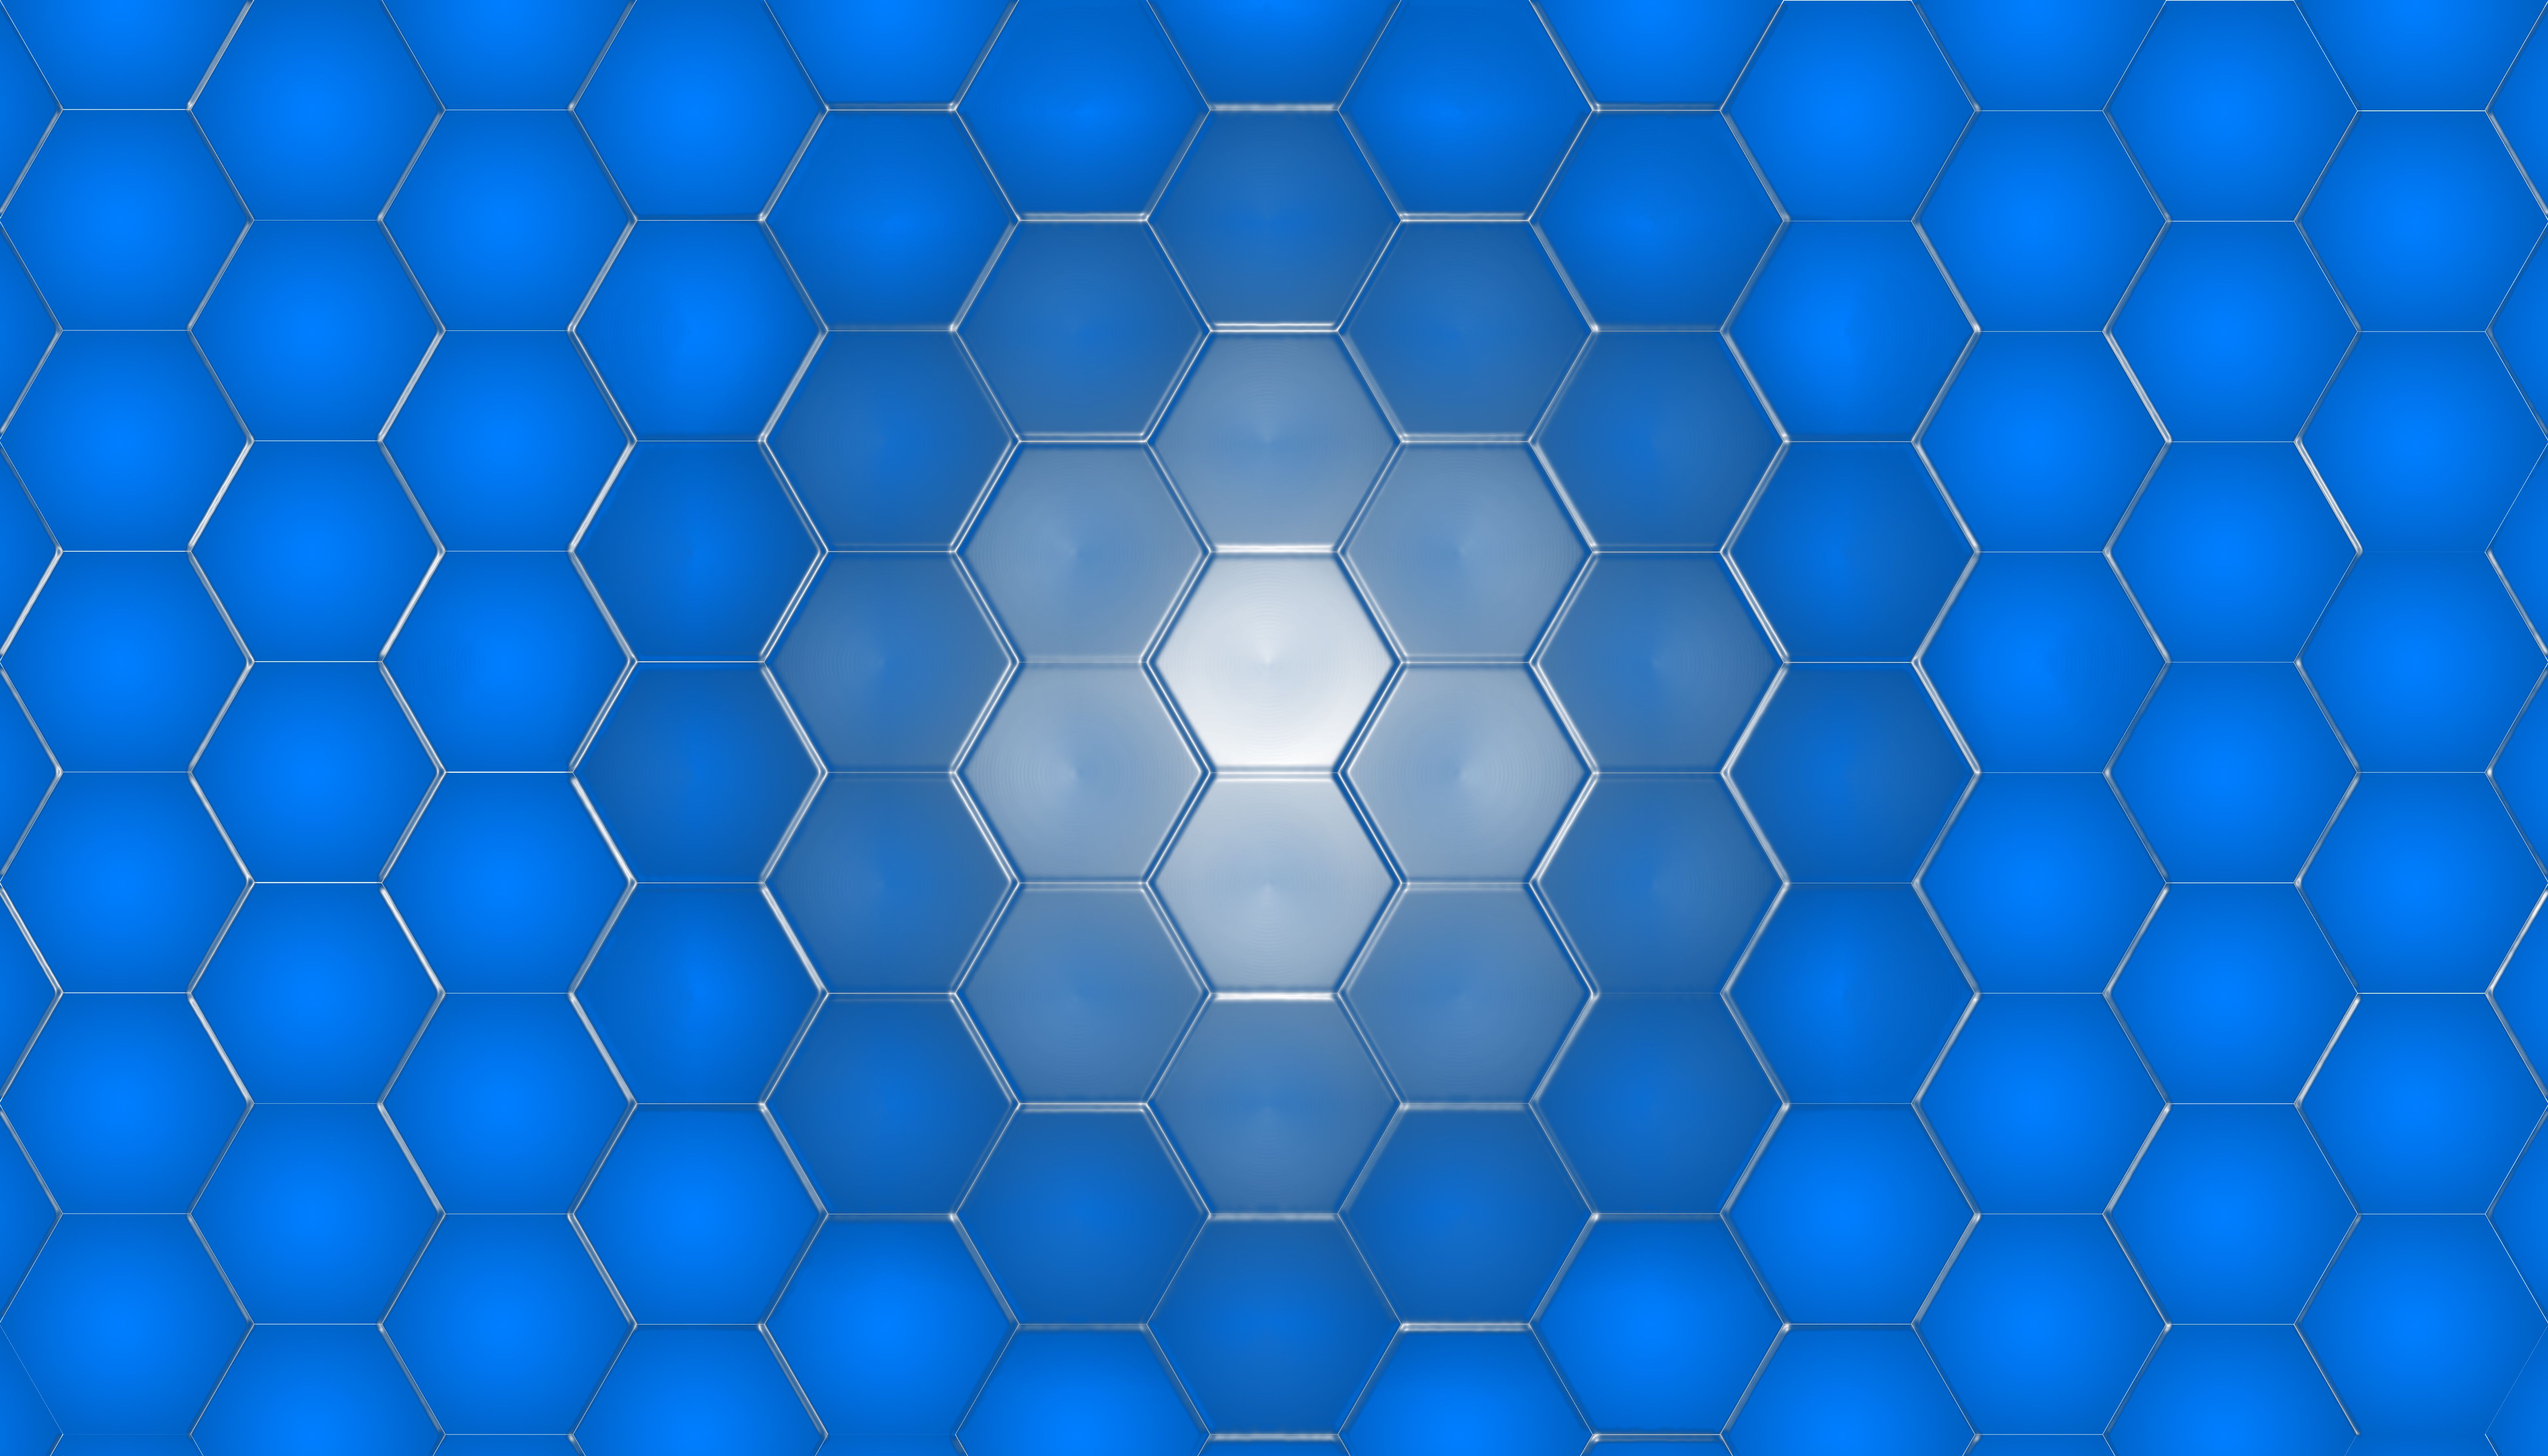 Free download Download Hexagonal Pattern [6300x3600] for your Desktop, Mobile & Tablet. Explore Hexagonal Wallpaper. Blue Hexagon Wallpaper, David Hicks Hexagon Wallpaper, Hicks Hexagon Wallpaper